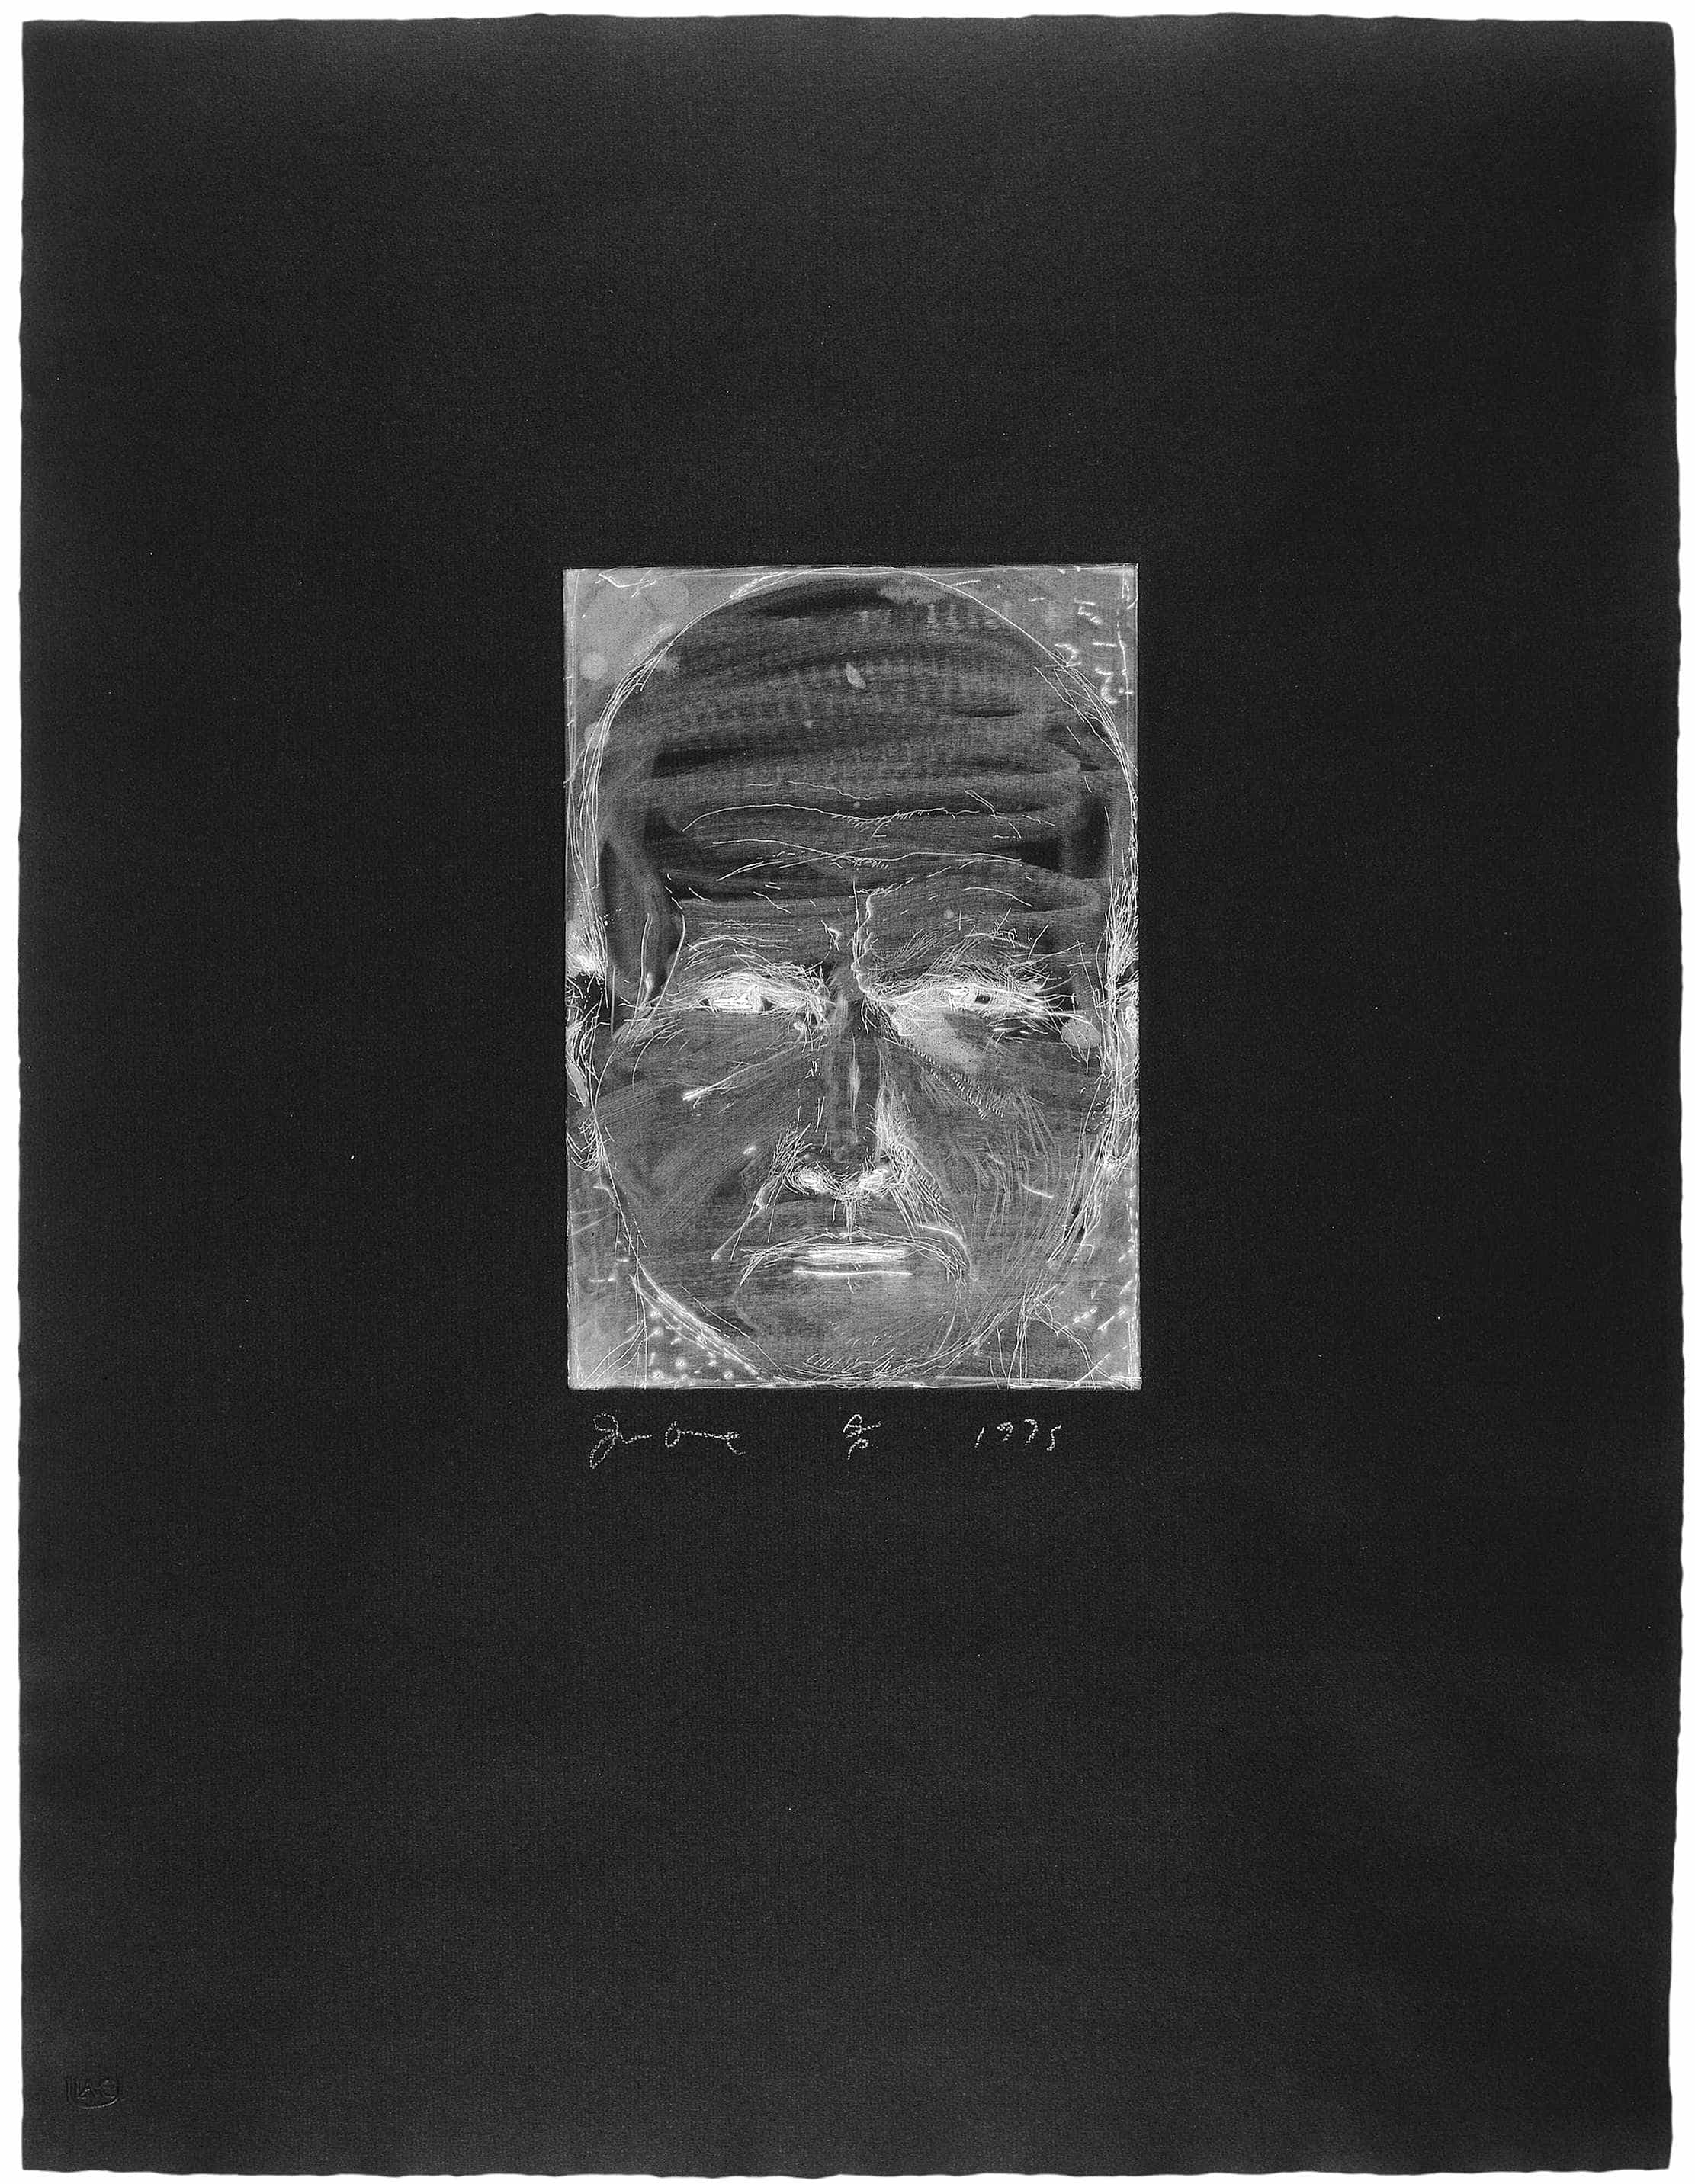 Jim Dine, Self Portrait as a Negative, 1975